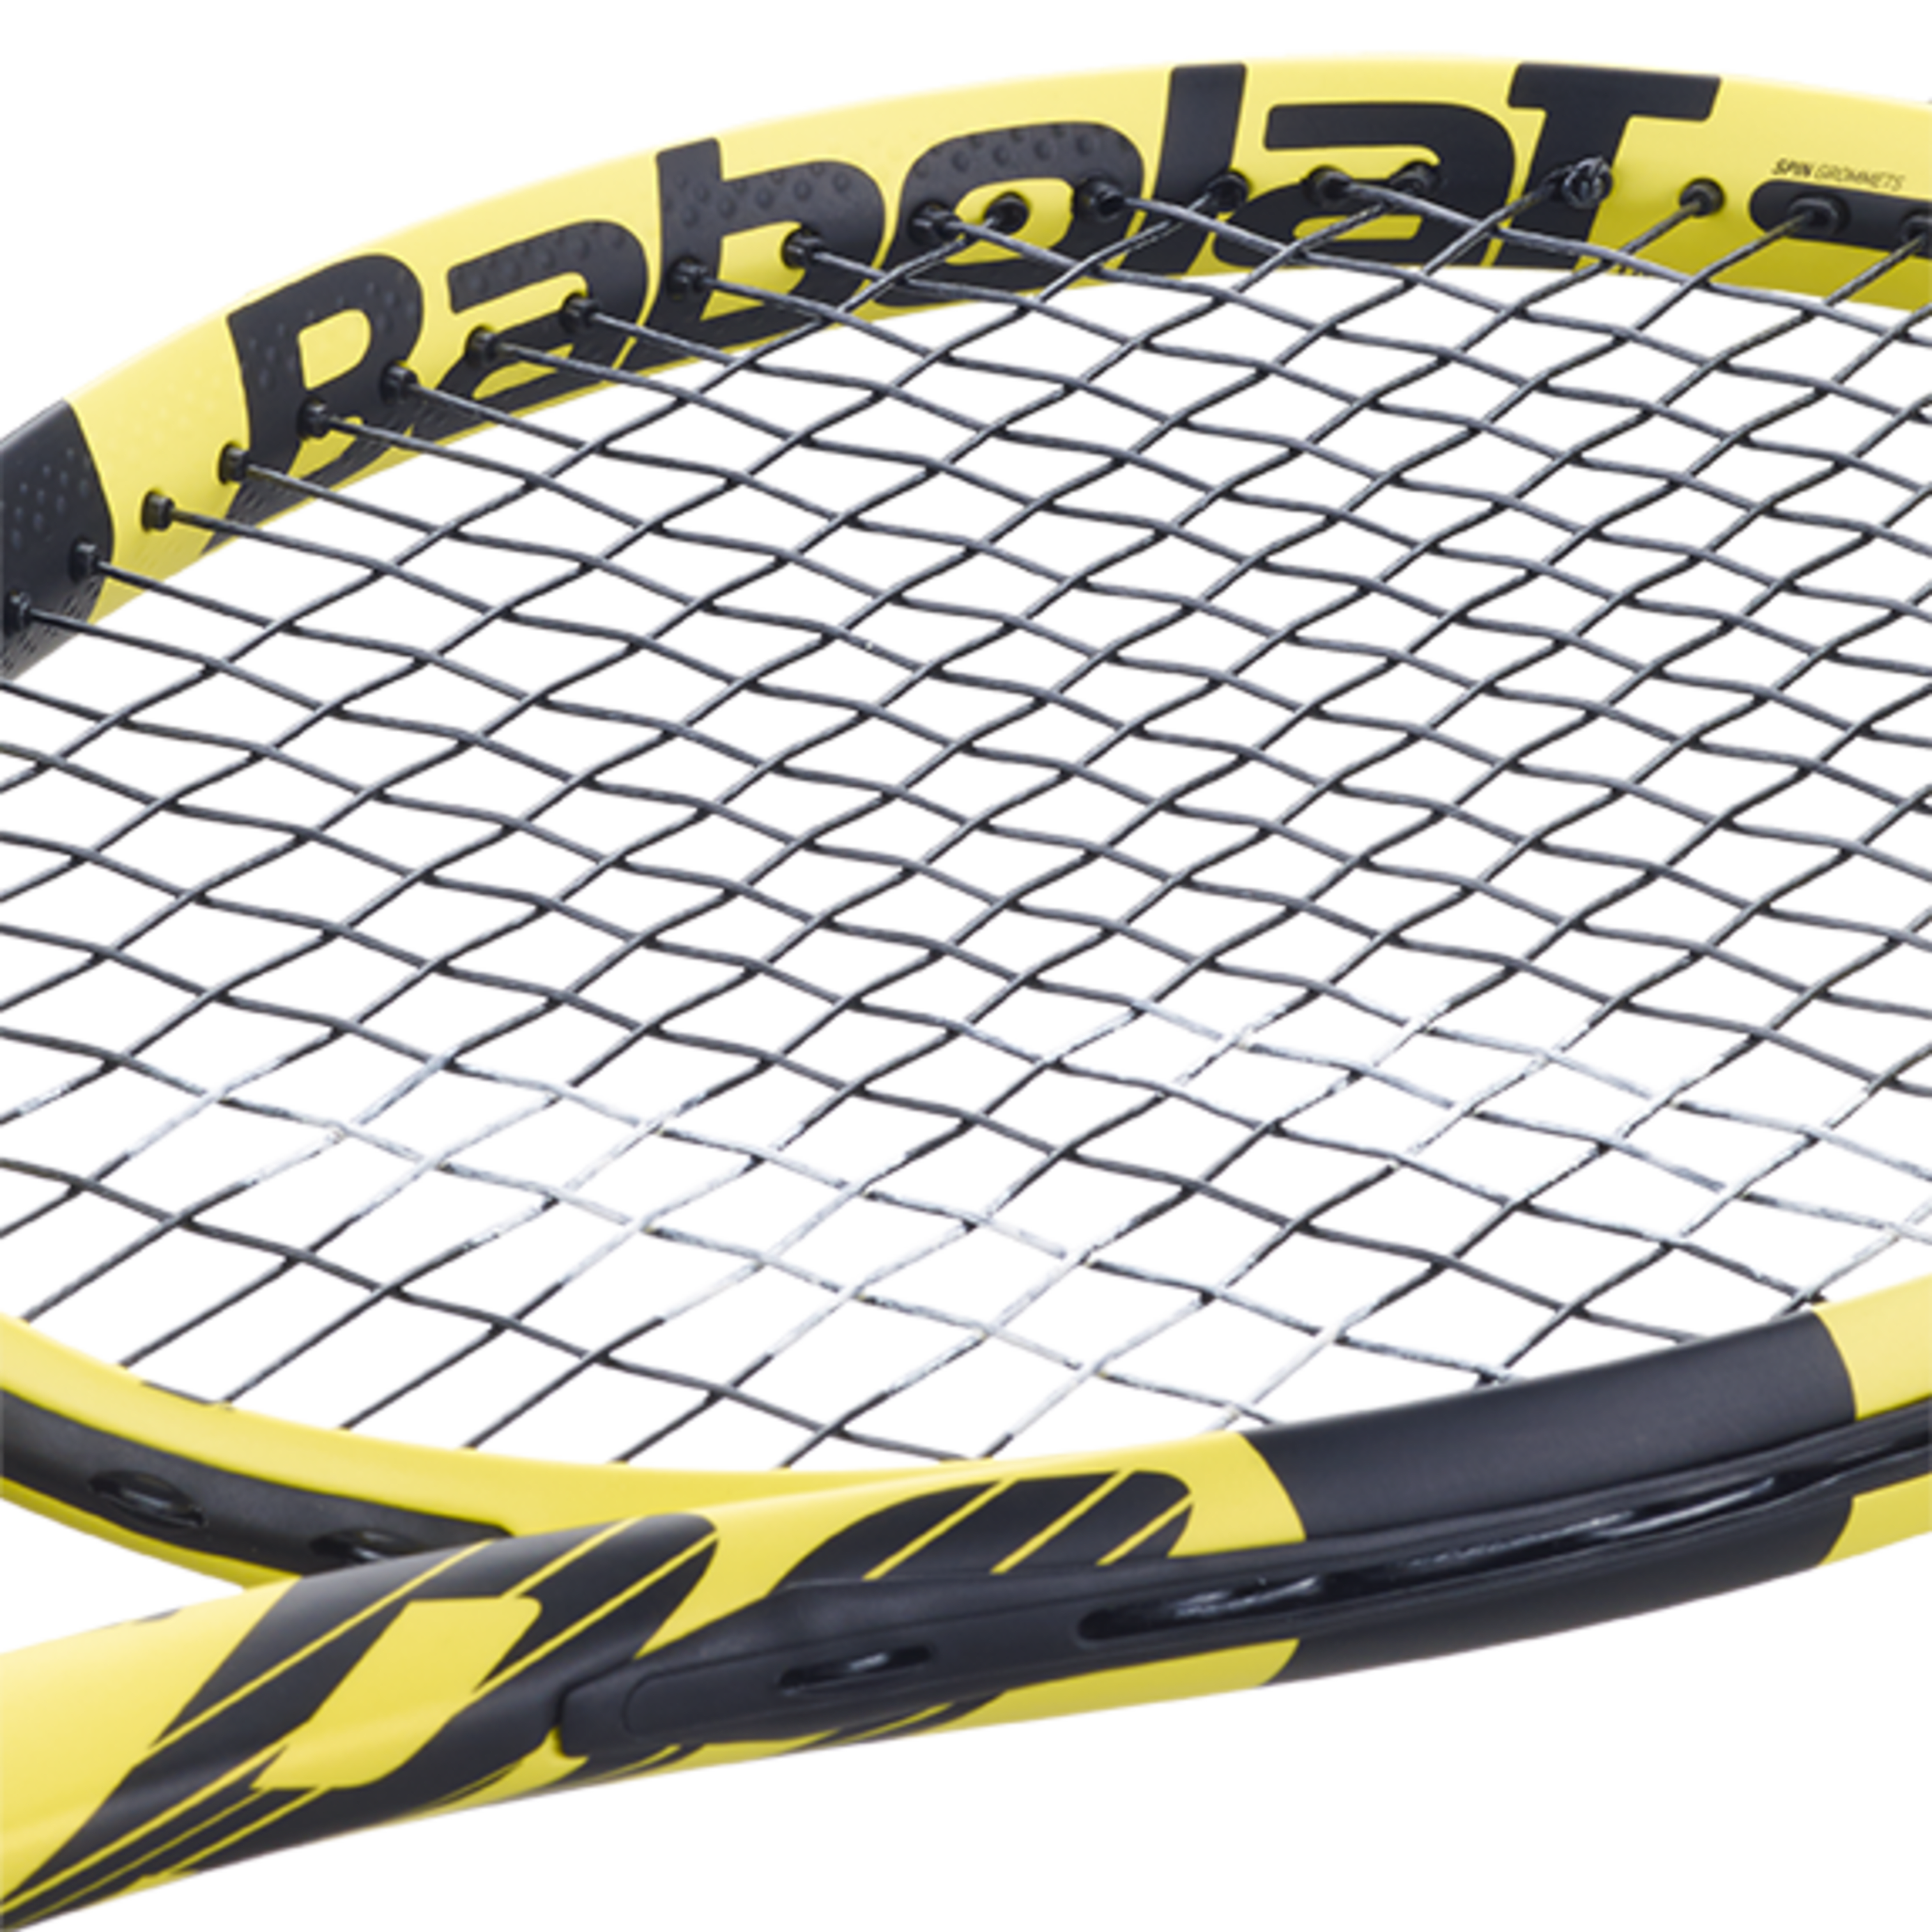 Schwarz Tennis String Babolat Unisex – Adult's RPM Rough Saitenset 12m 